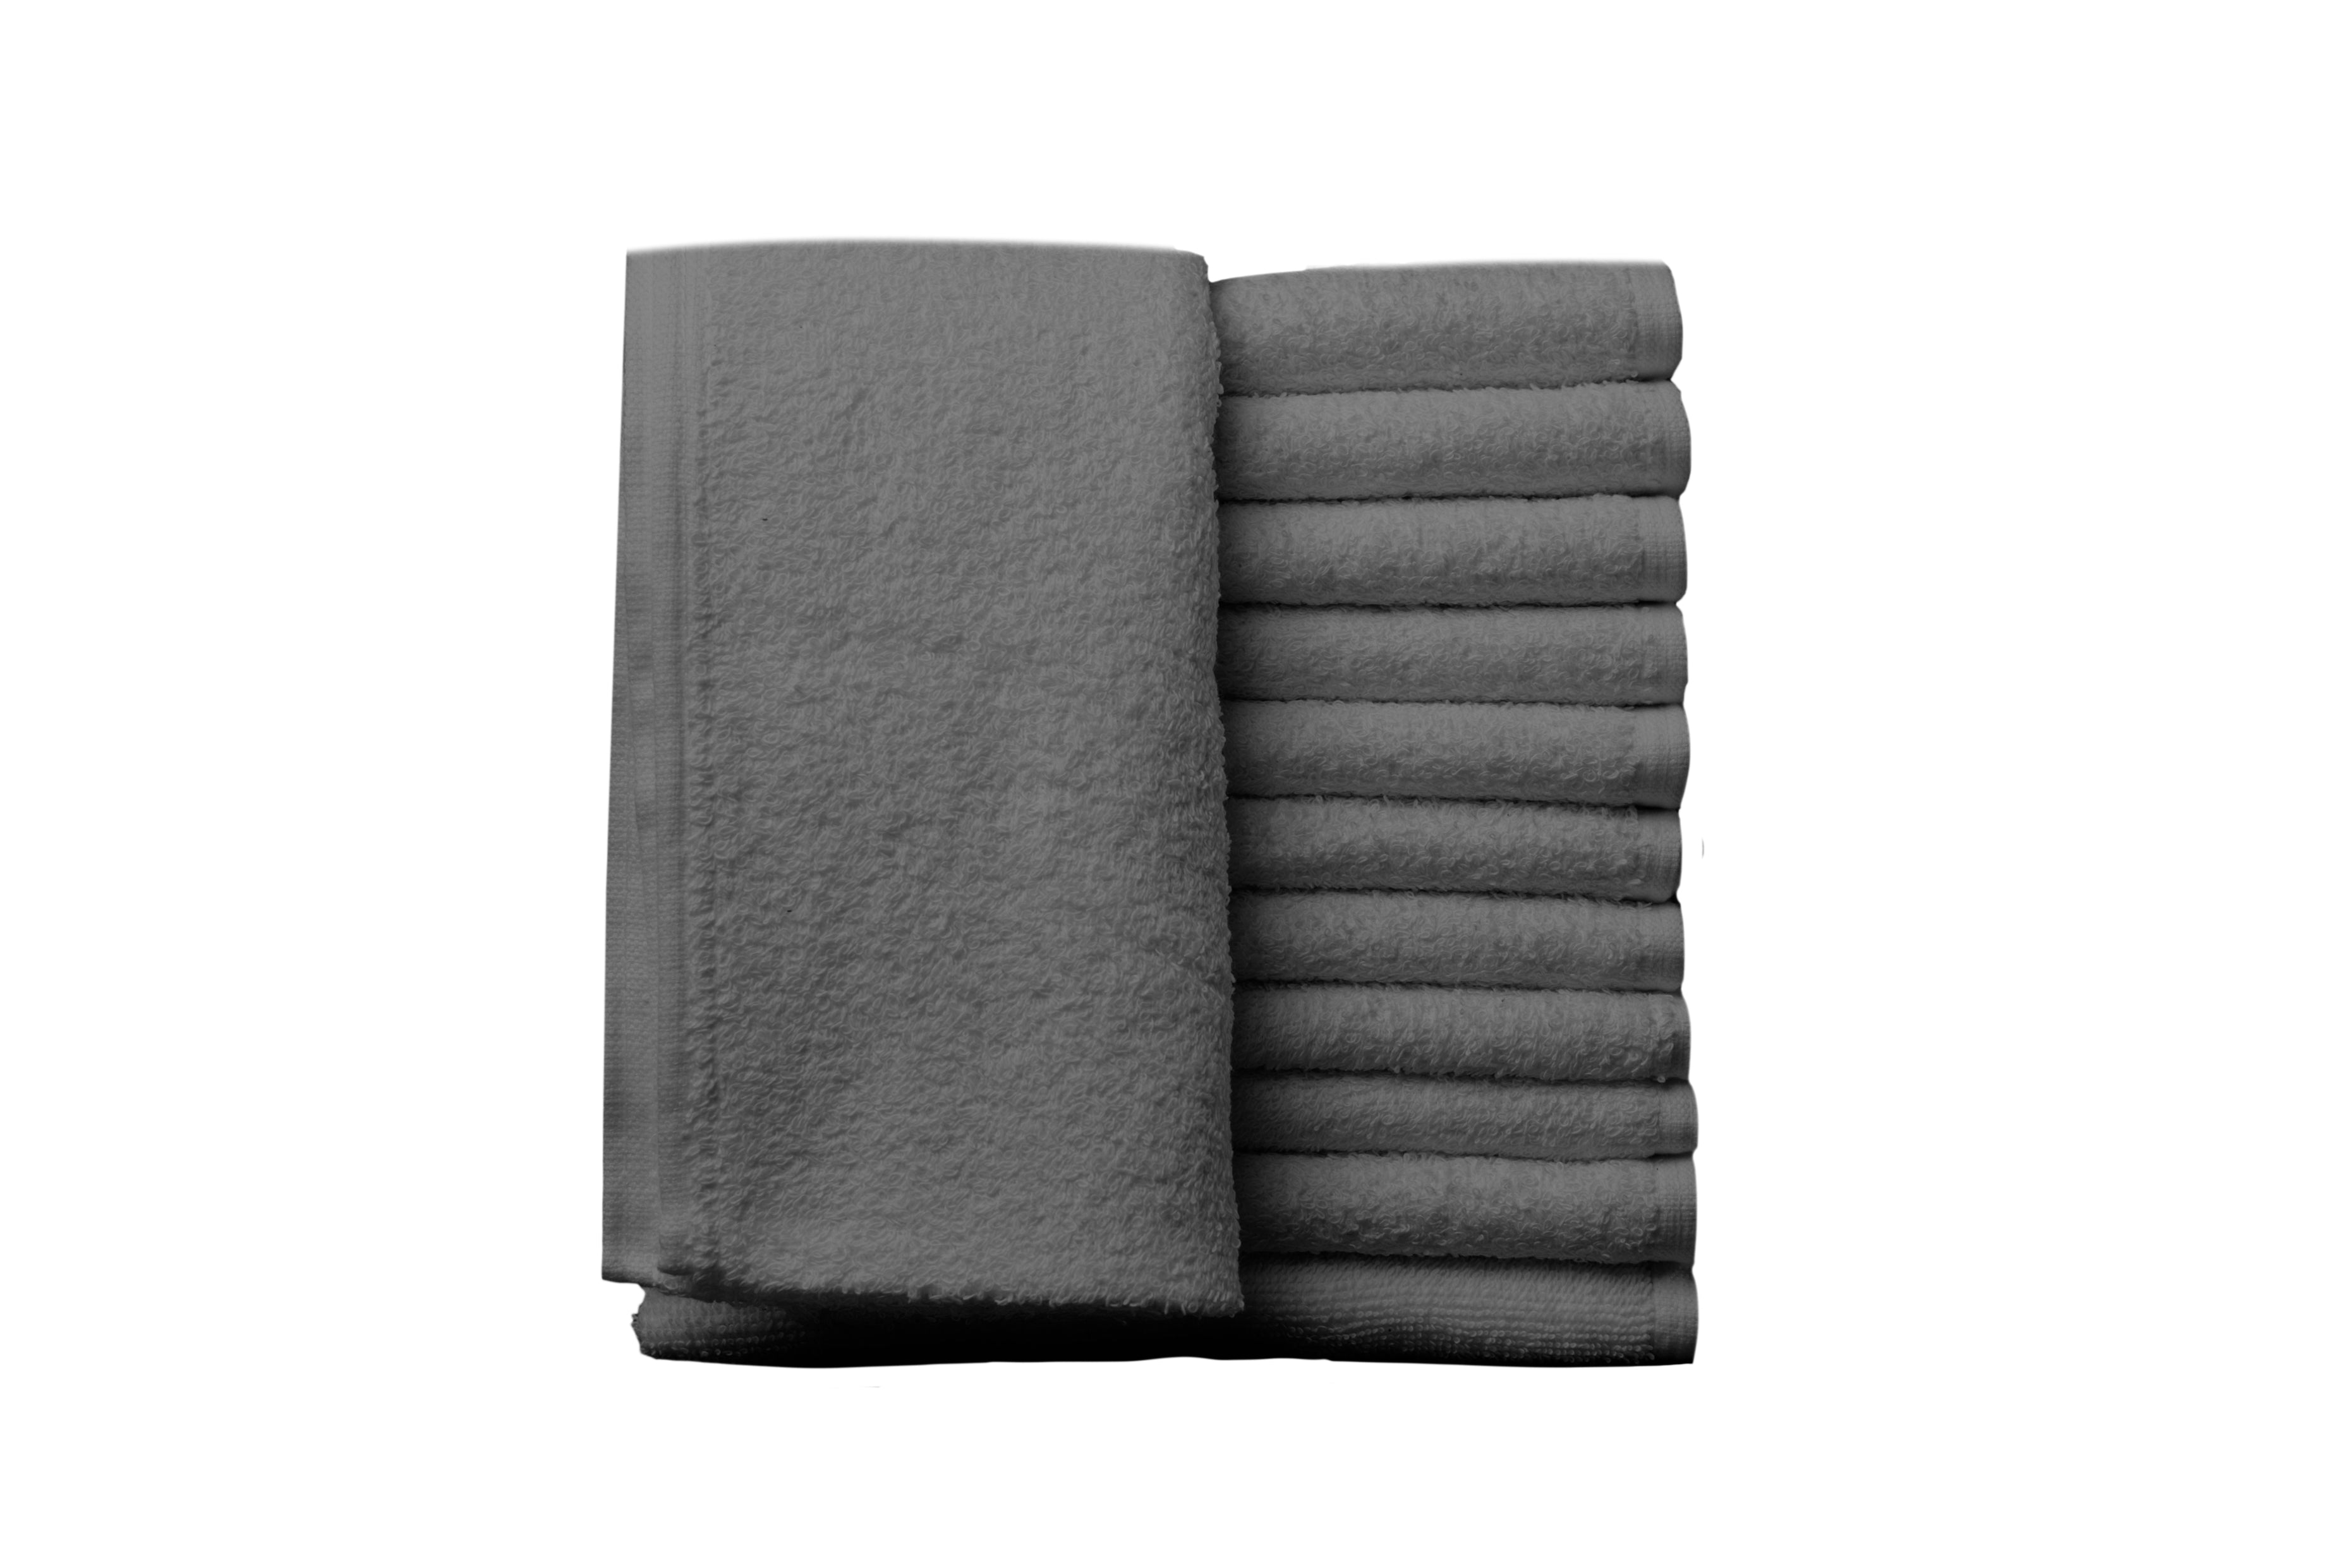 Partex dlux3™ Towels